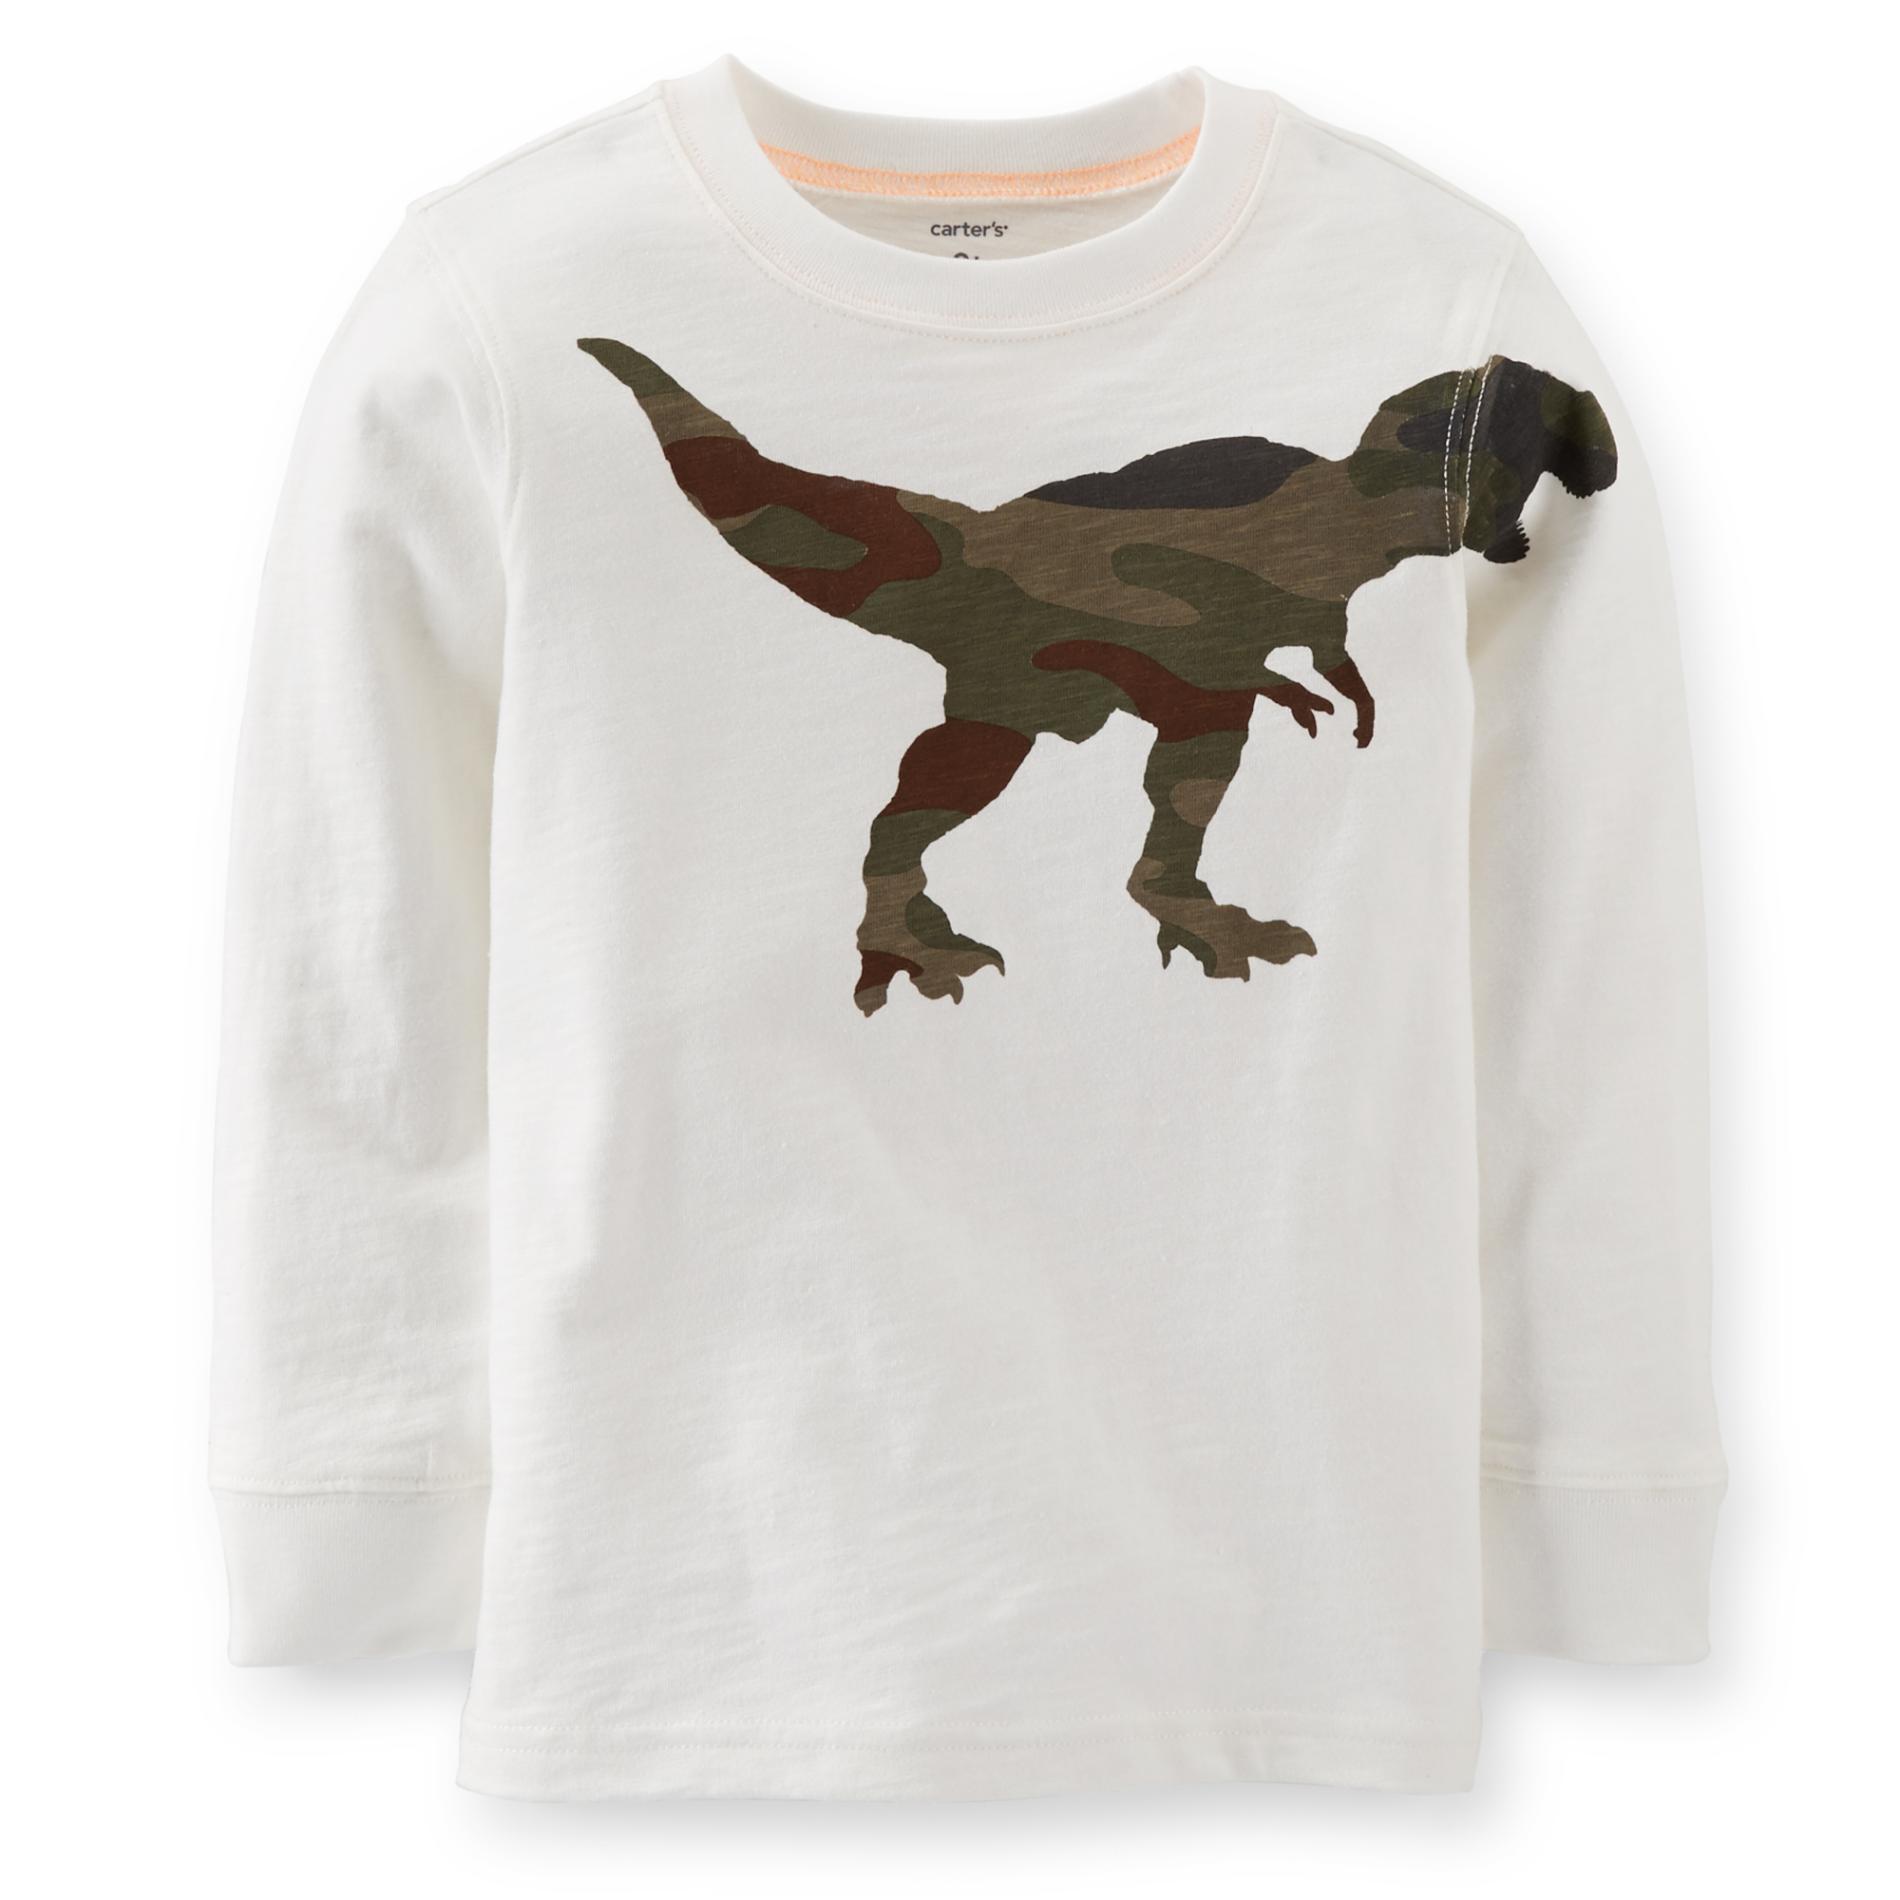 Carter's Toddler Boy's Sweatshirt - T. Rex Dinosaur